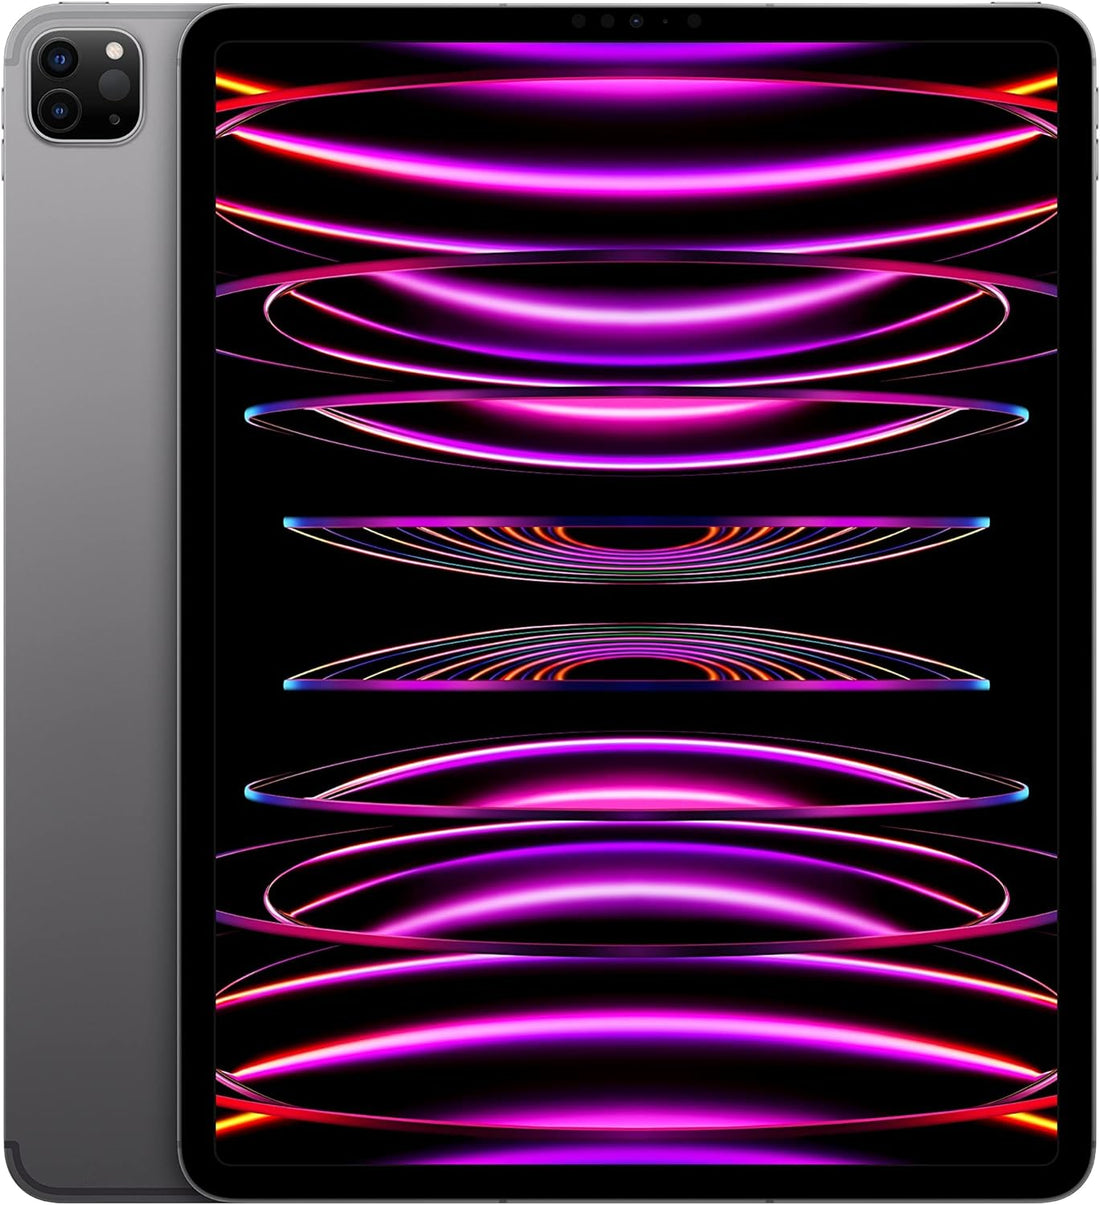 Apple iPad Pro 12.9-inch (6th Gen) 512GB, WIFI + Unlocked Cellular - Space Gray (Pre-Owned)